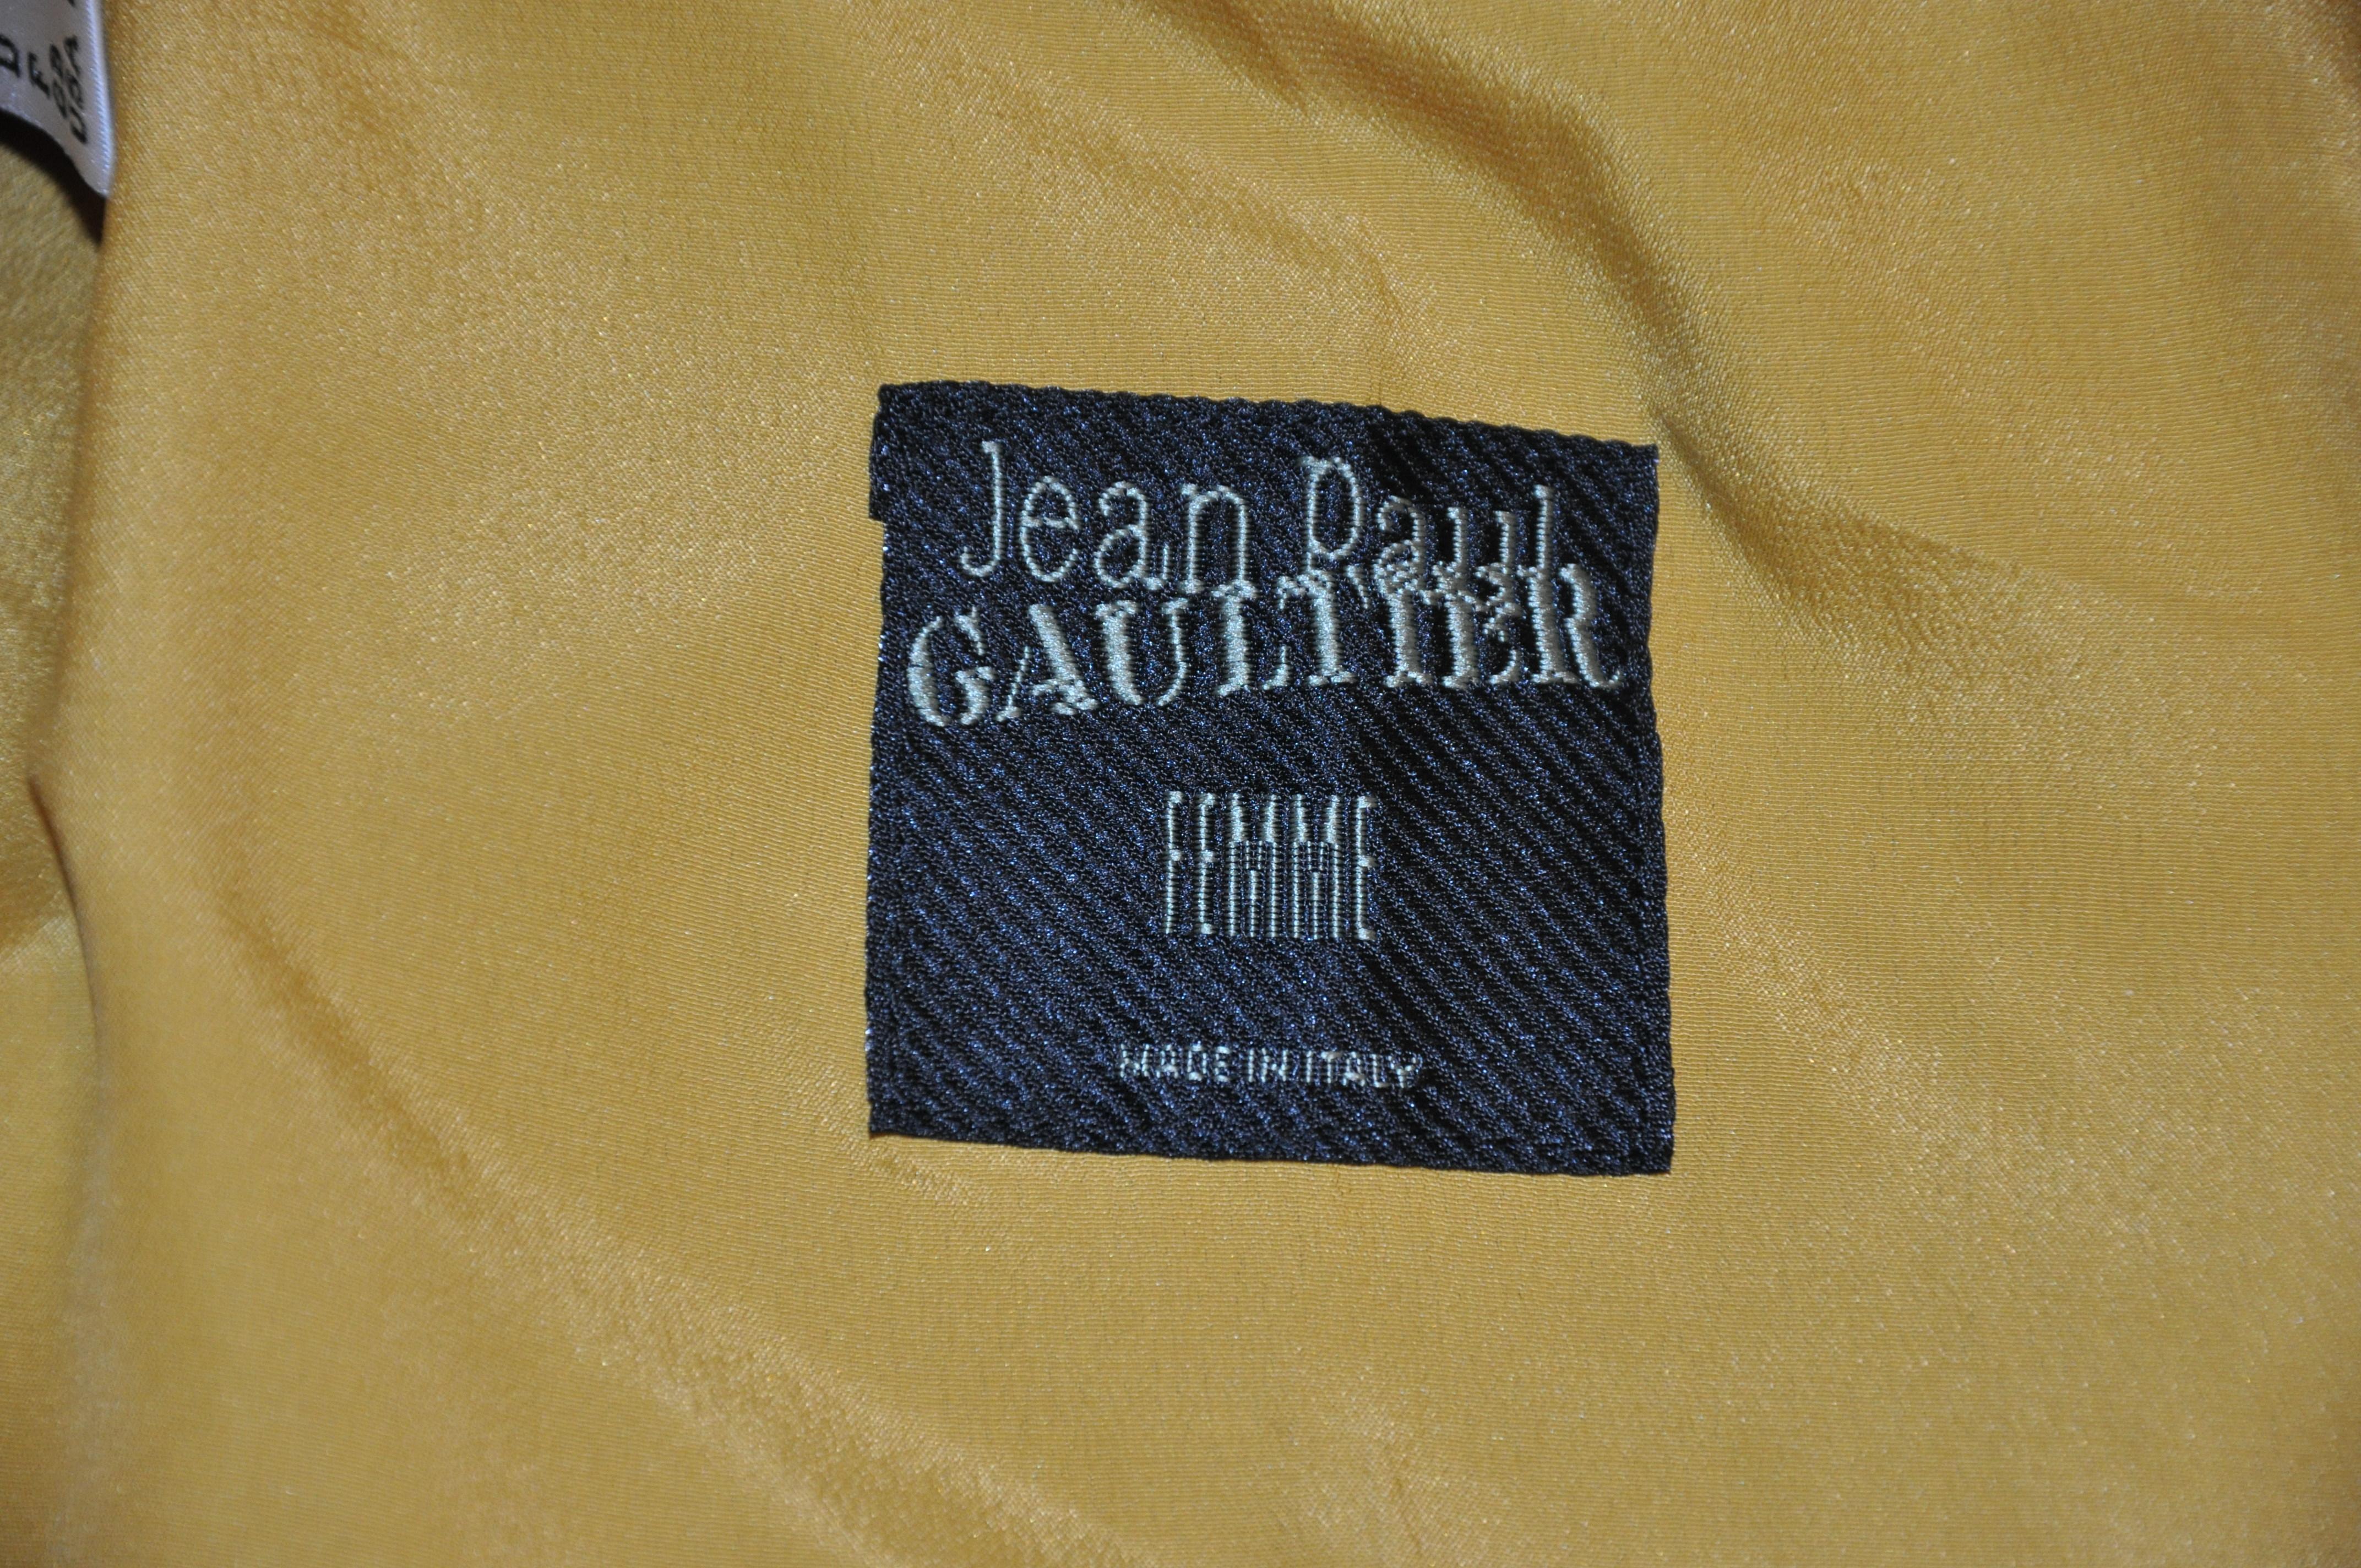      Jean Paul Gaultier seltene schwarze Jacke im Military-Stil hat 5 geätzte 